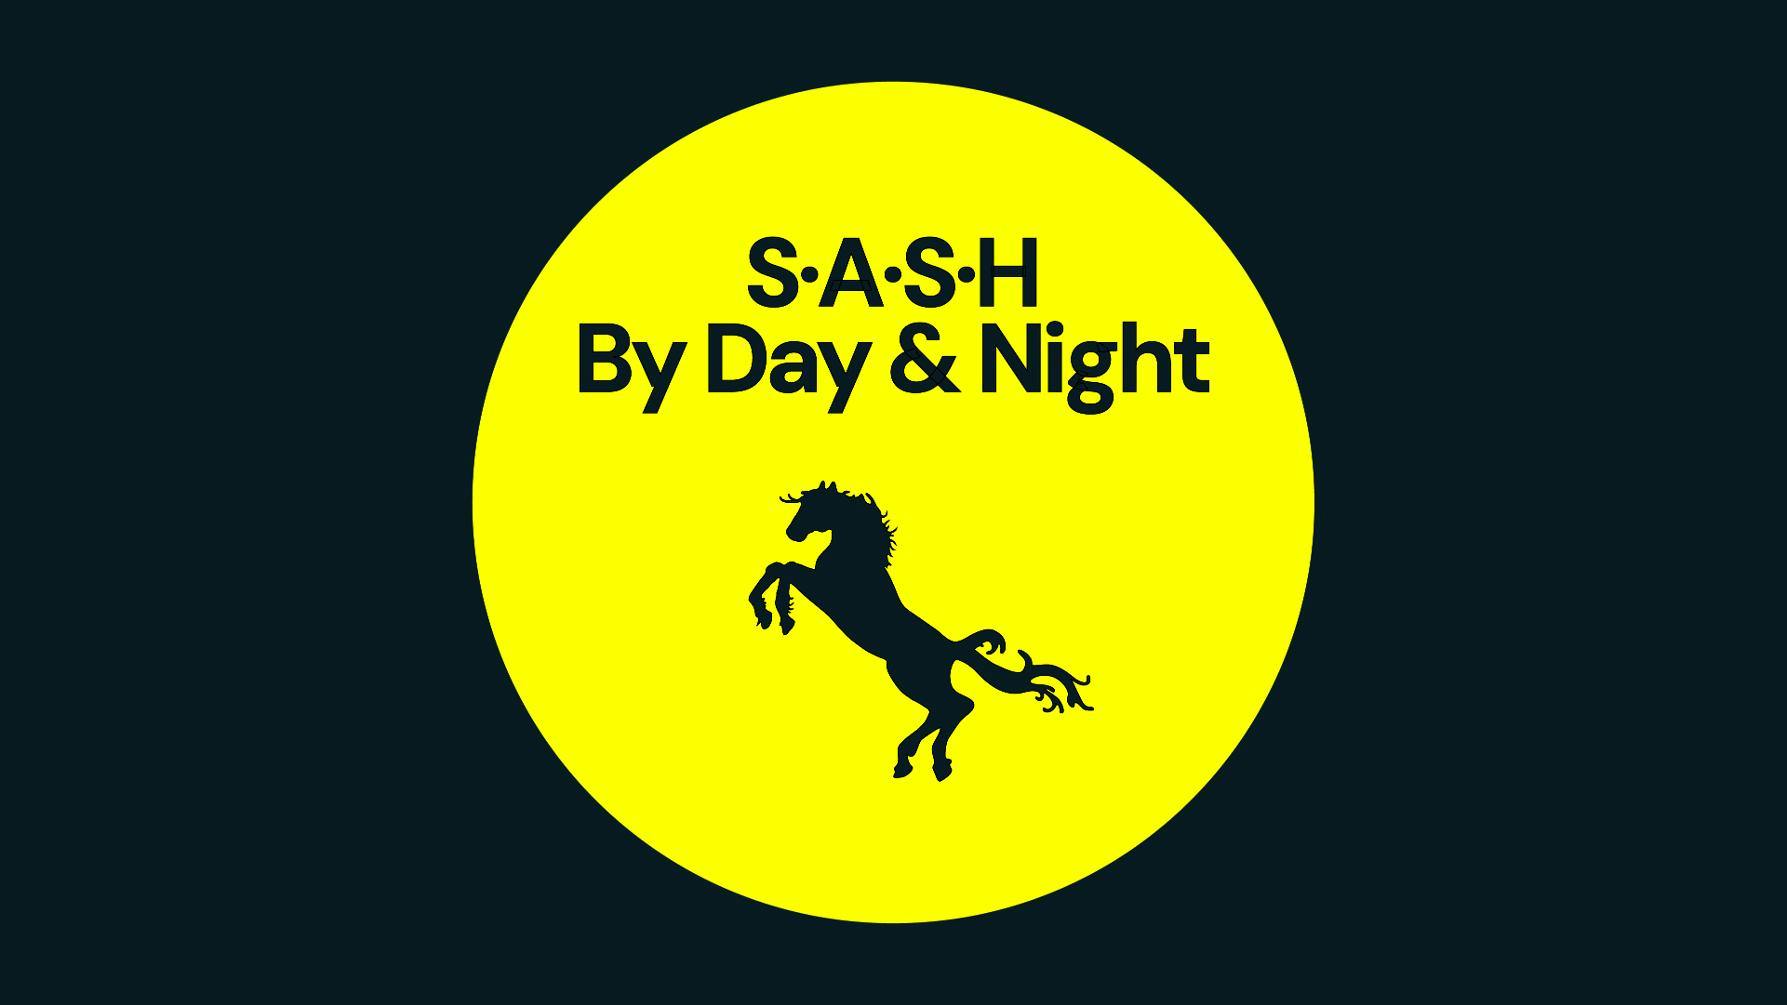 ★ S.A.S.H By Day & Night ★ Sunday 21st July ★